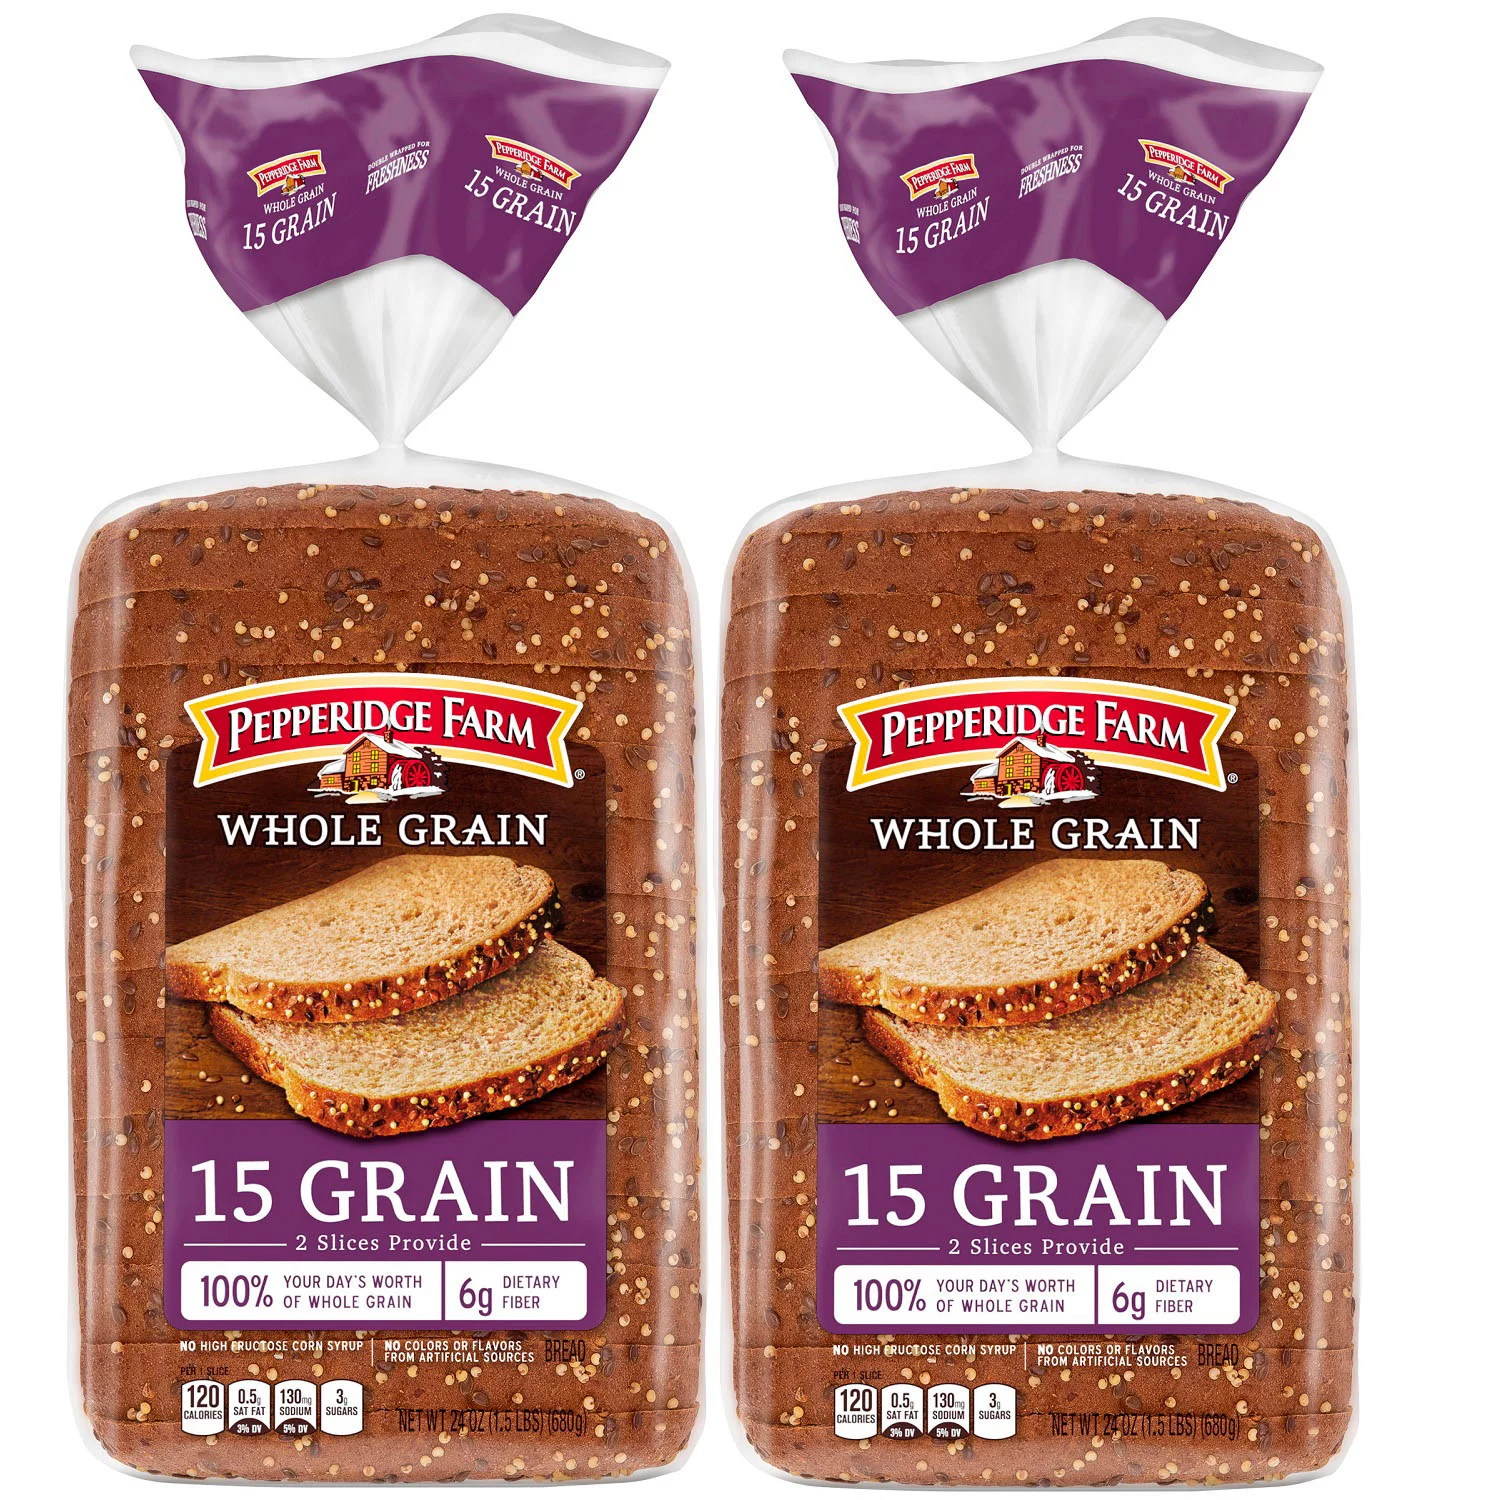 Pepperidge Farm Whole Grain 15 Grain Bread